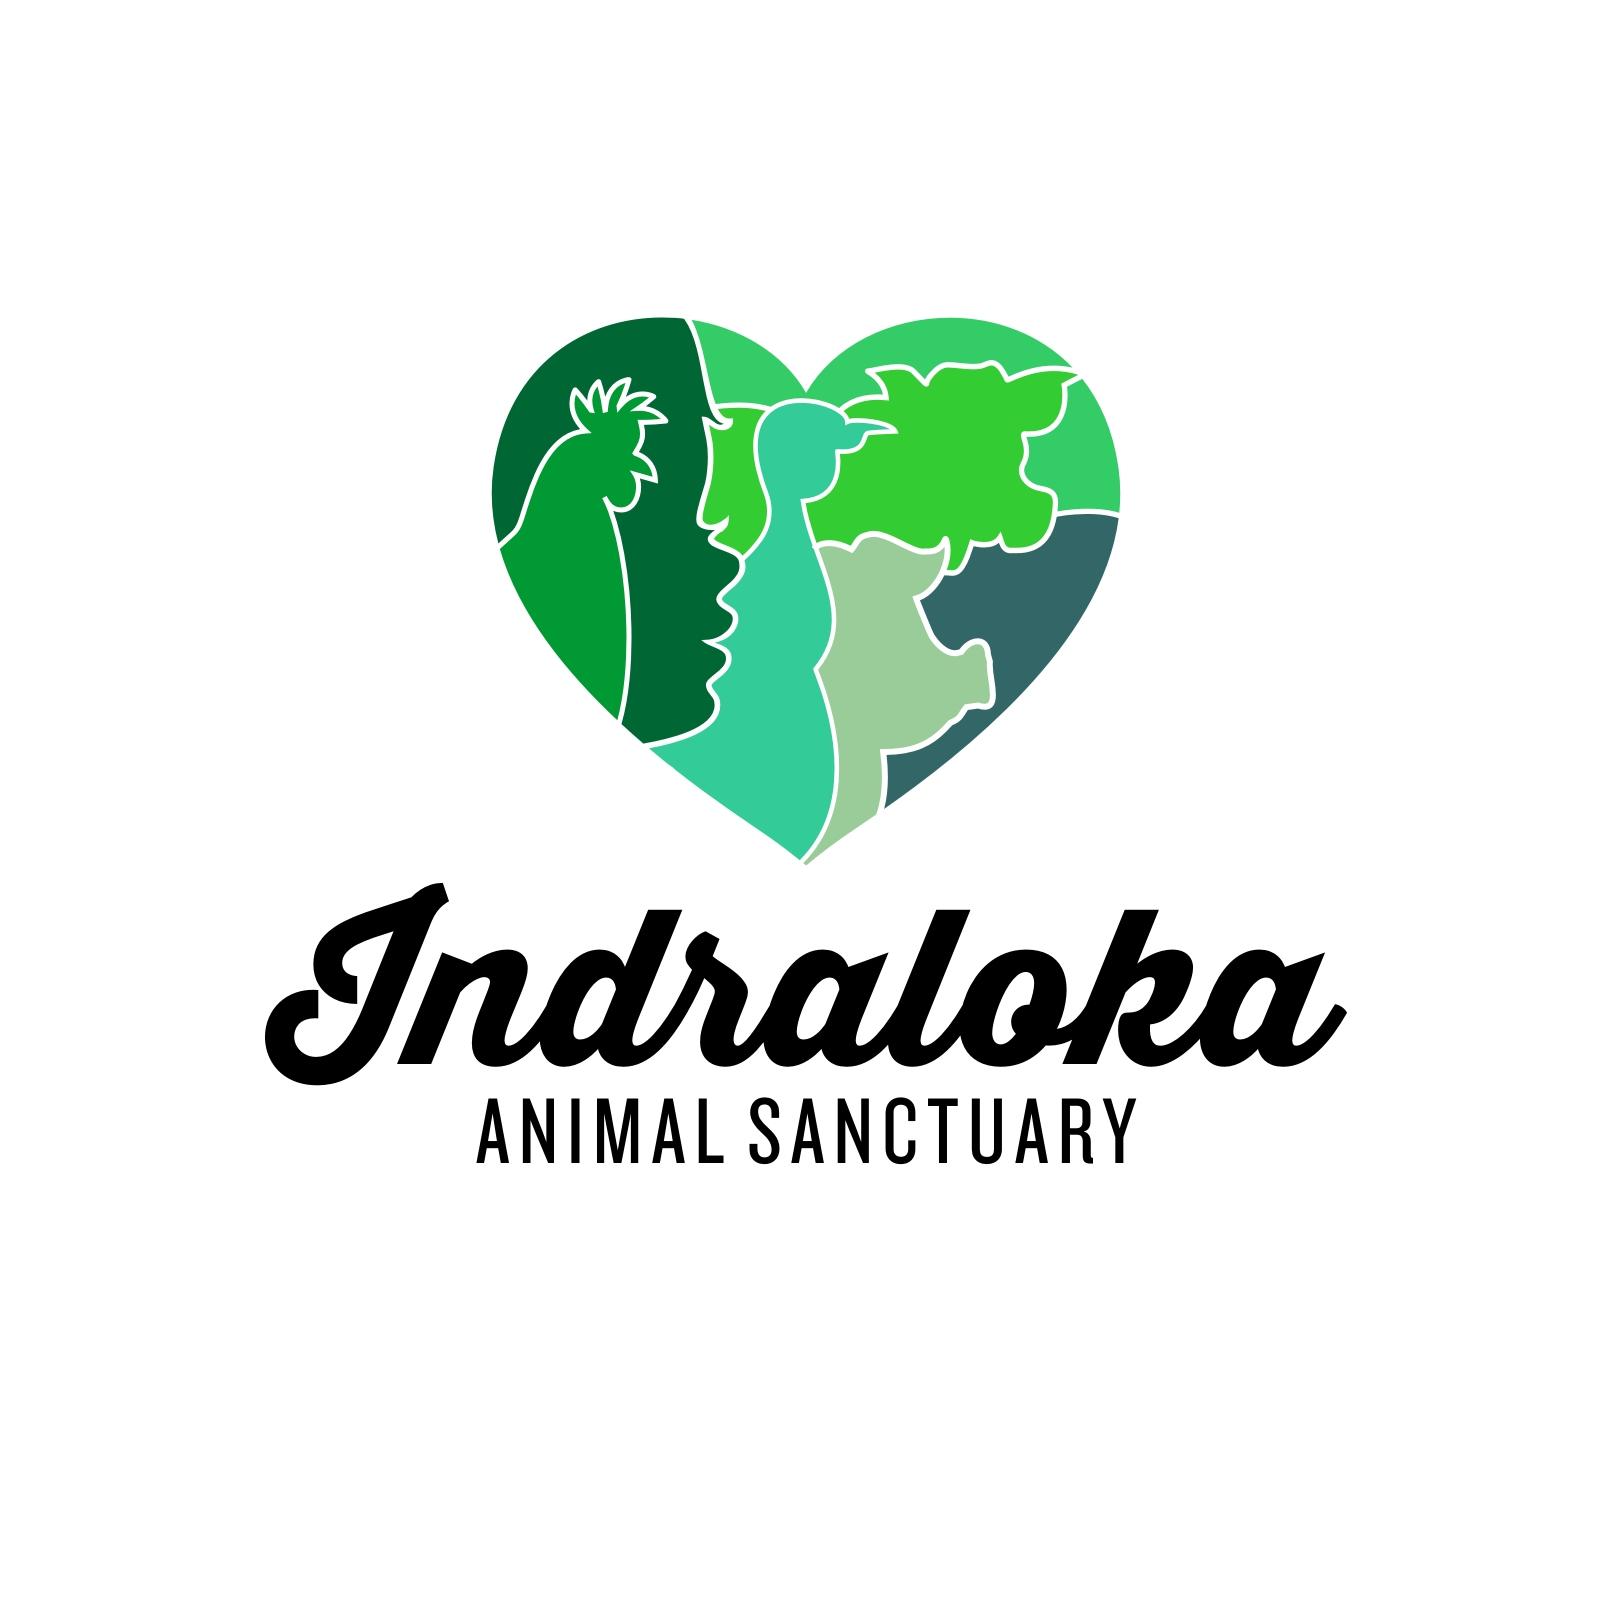 Farm Sanctuary Logo - Stories from Indraloka Animal Sanctuary